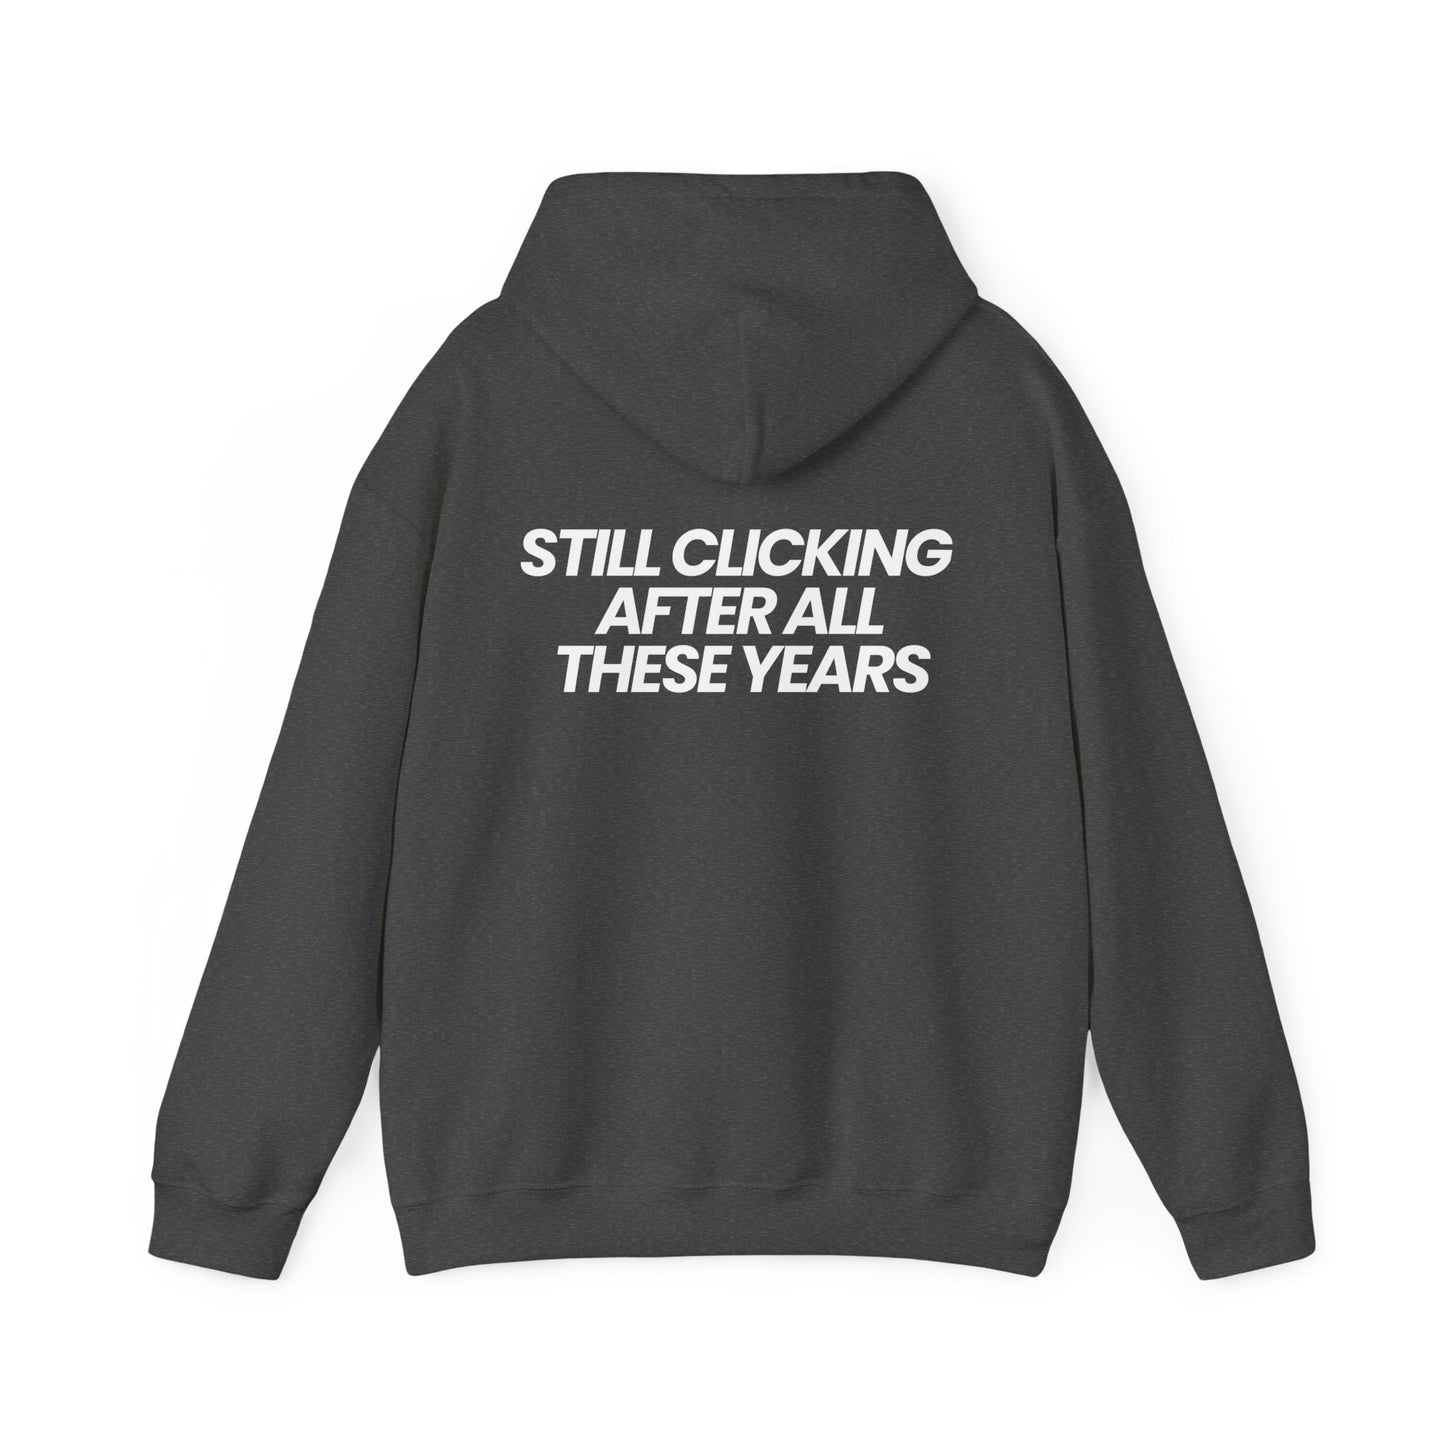 "ClickHole Forever" Limited Edition Sweatshirt